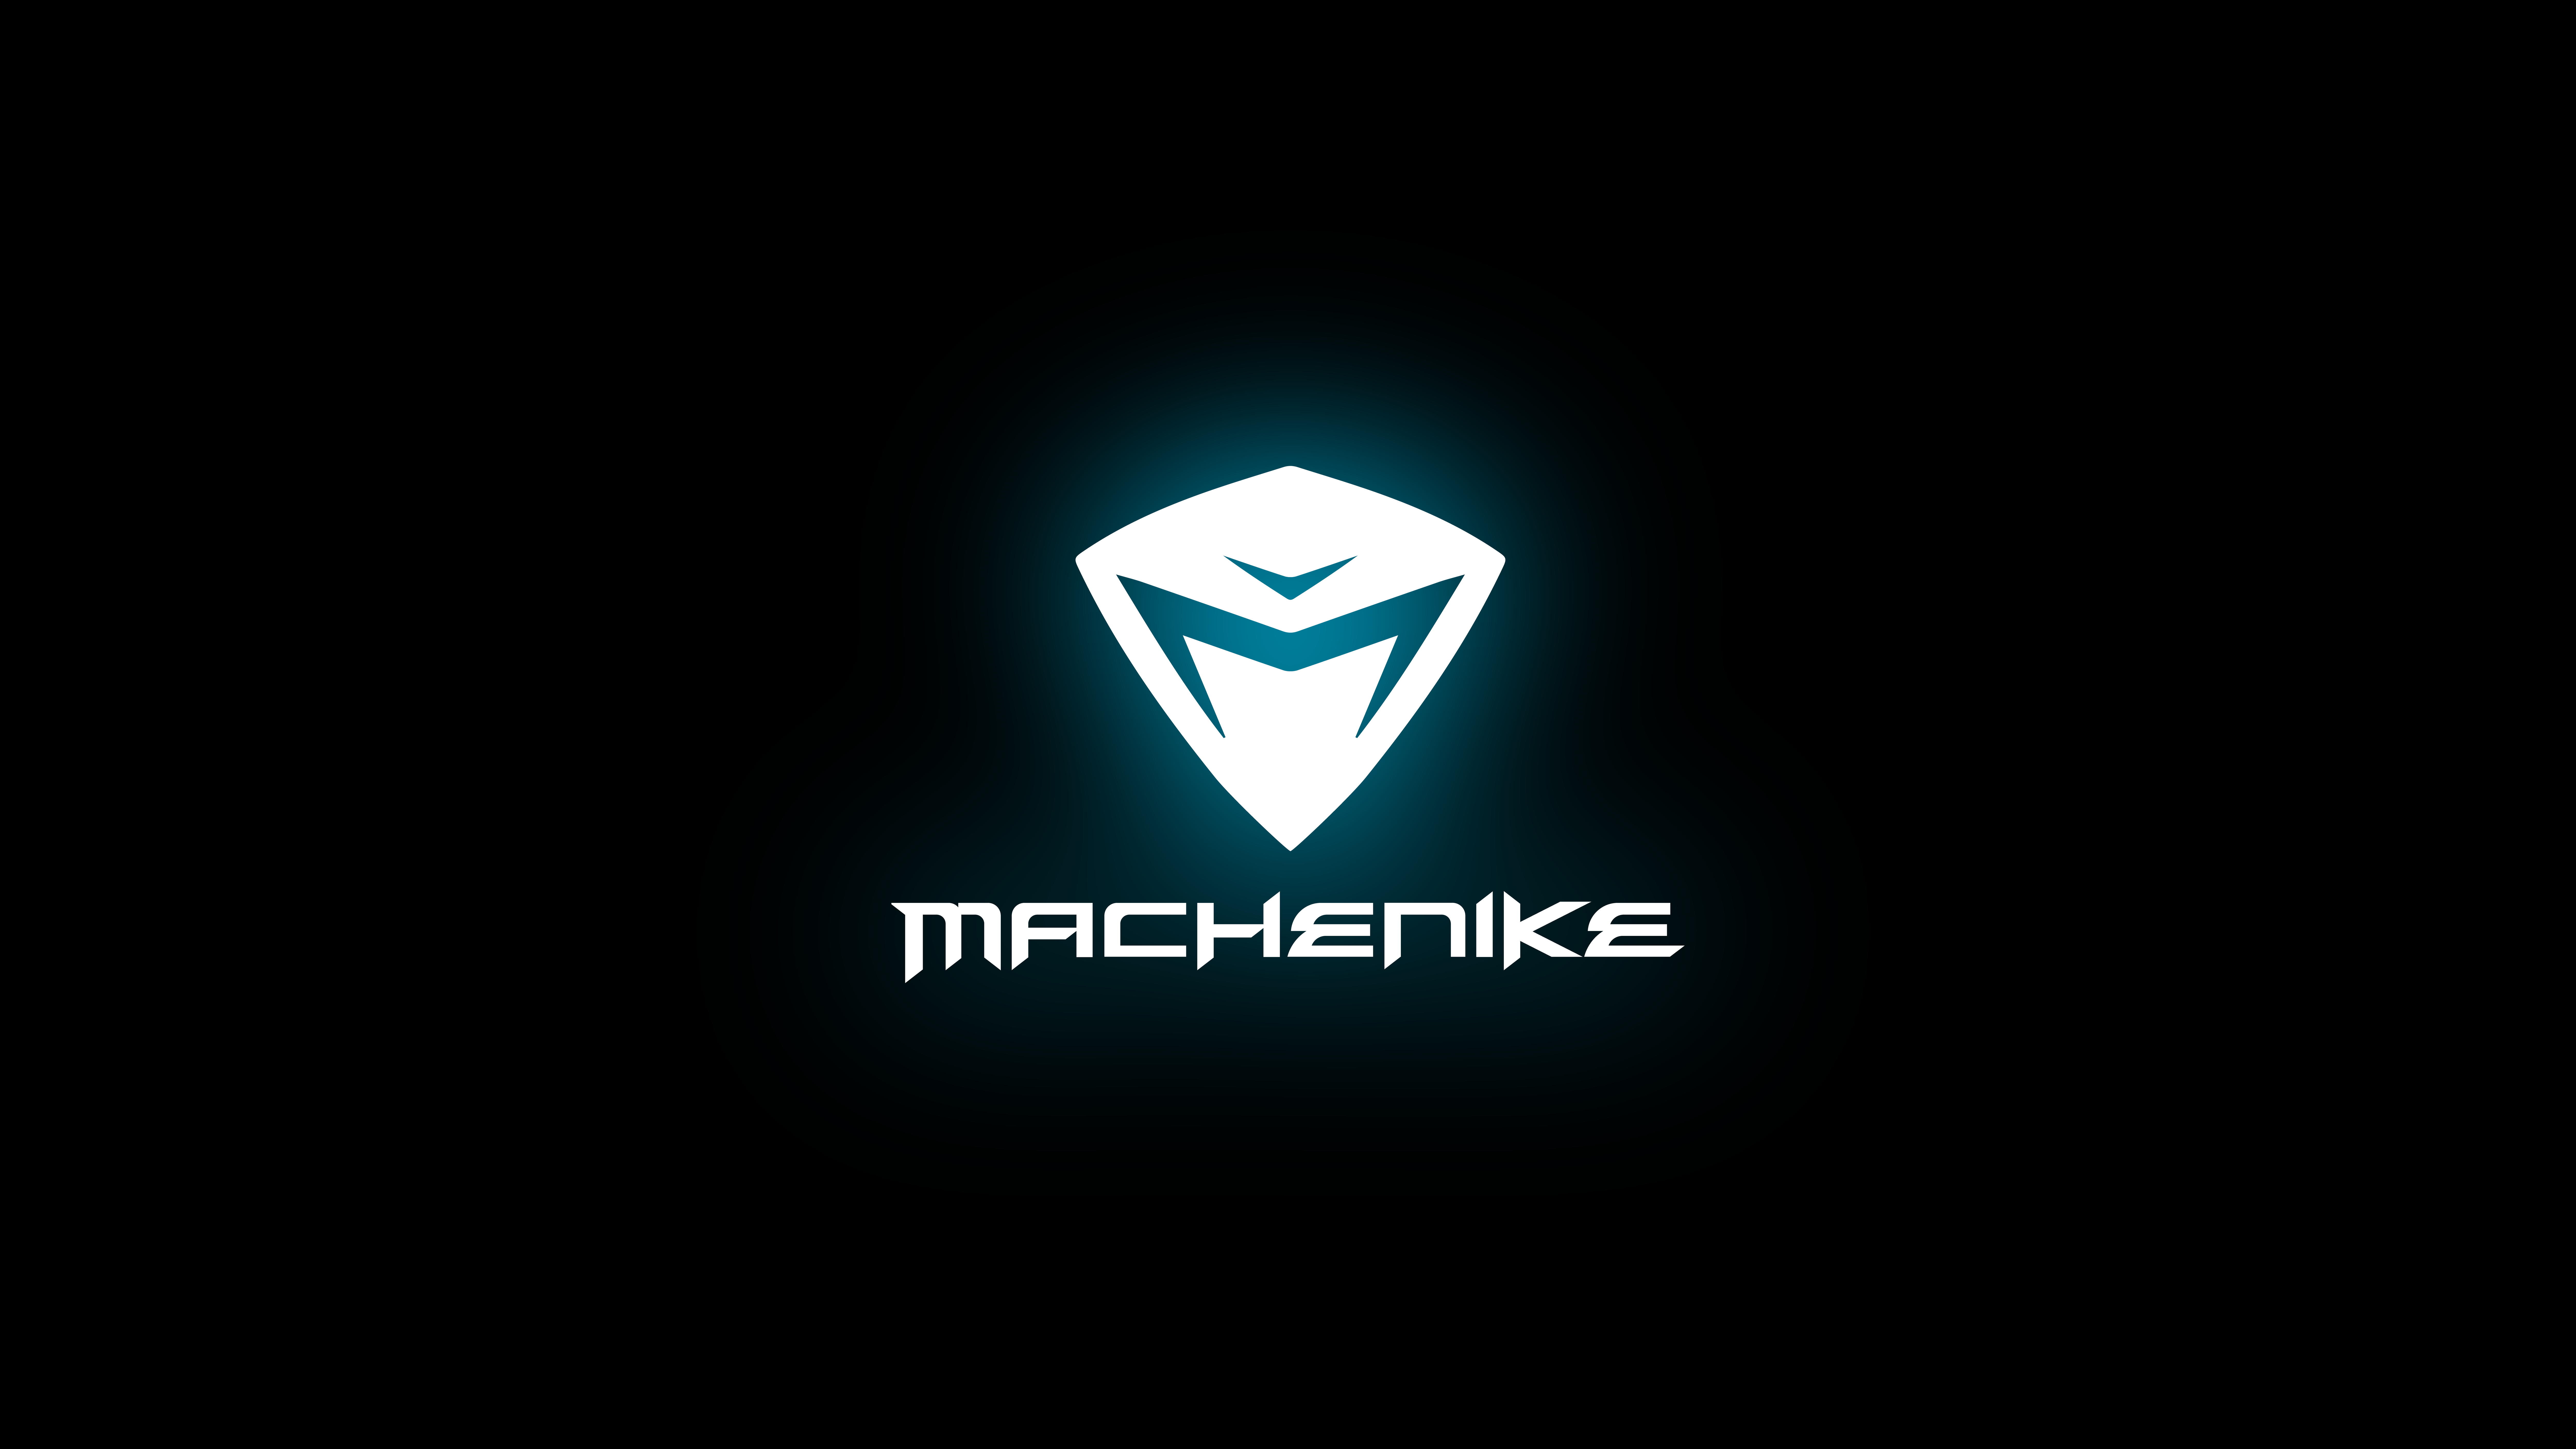 General 16000x9000 Machenike simple background logo